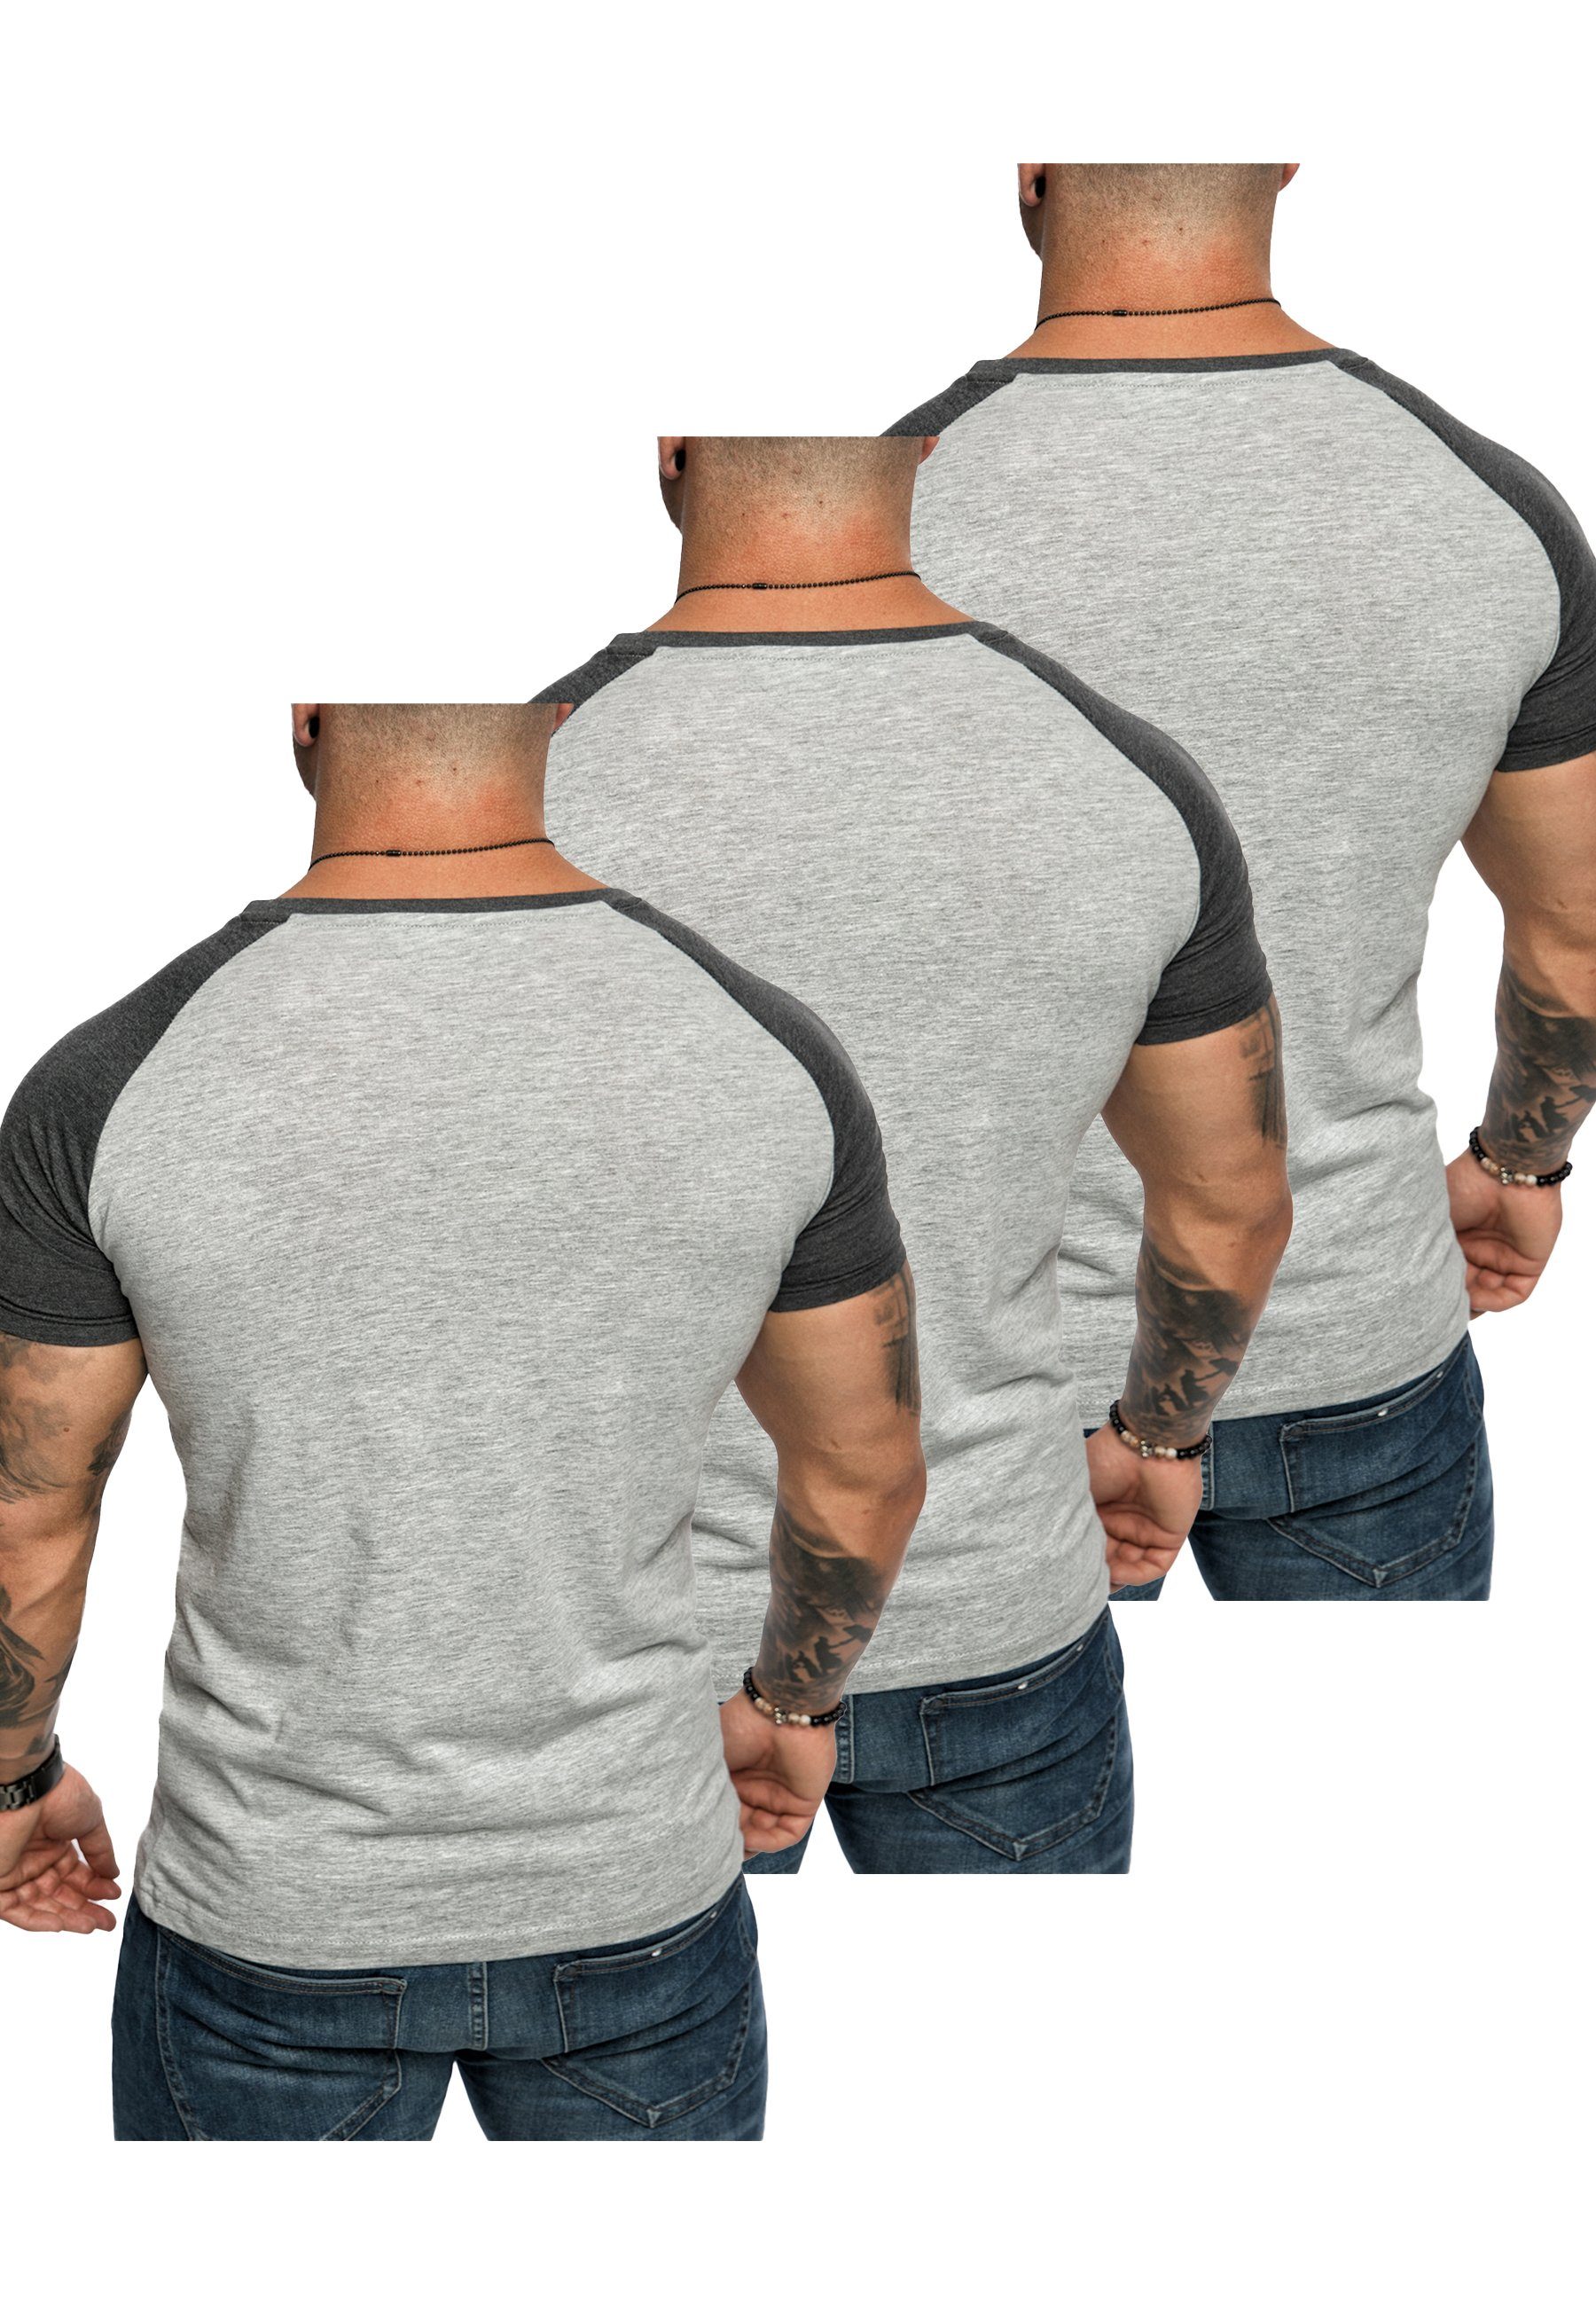 3. Basic Grau/Anthrazit) 3er-Pack Kontrast (3er-Pack) T-Shirt Amaci&Sons Oversize Raglan T-Shirts Herren T-Shirt SALEM (3x